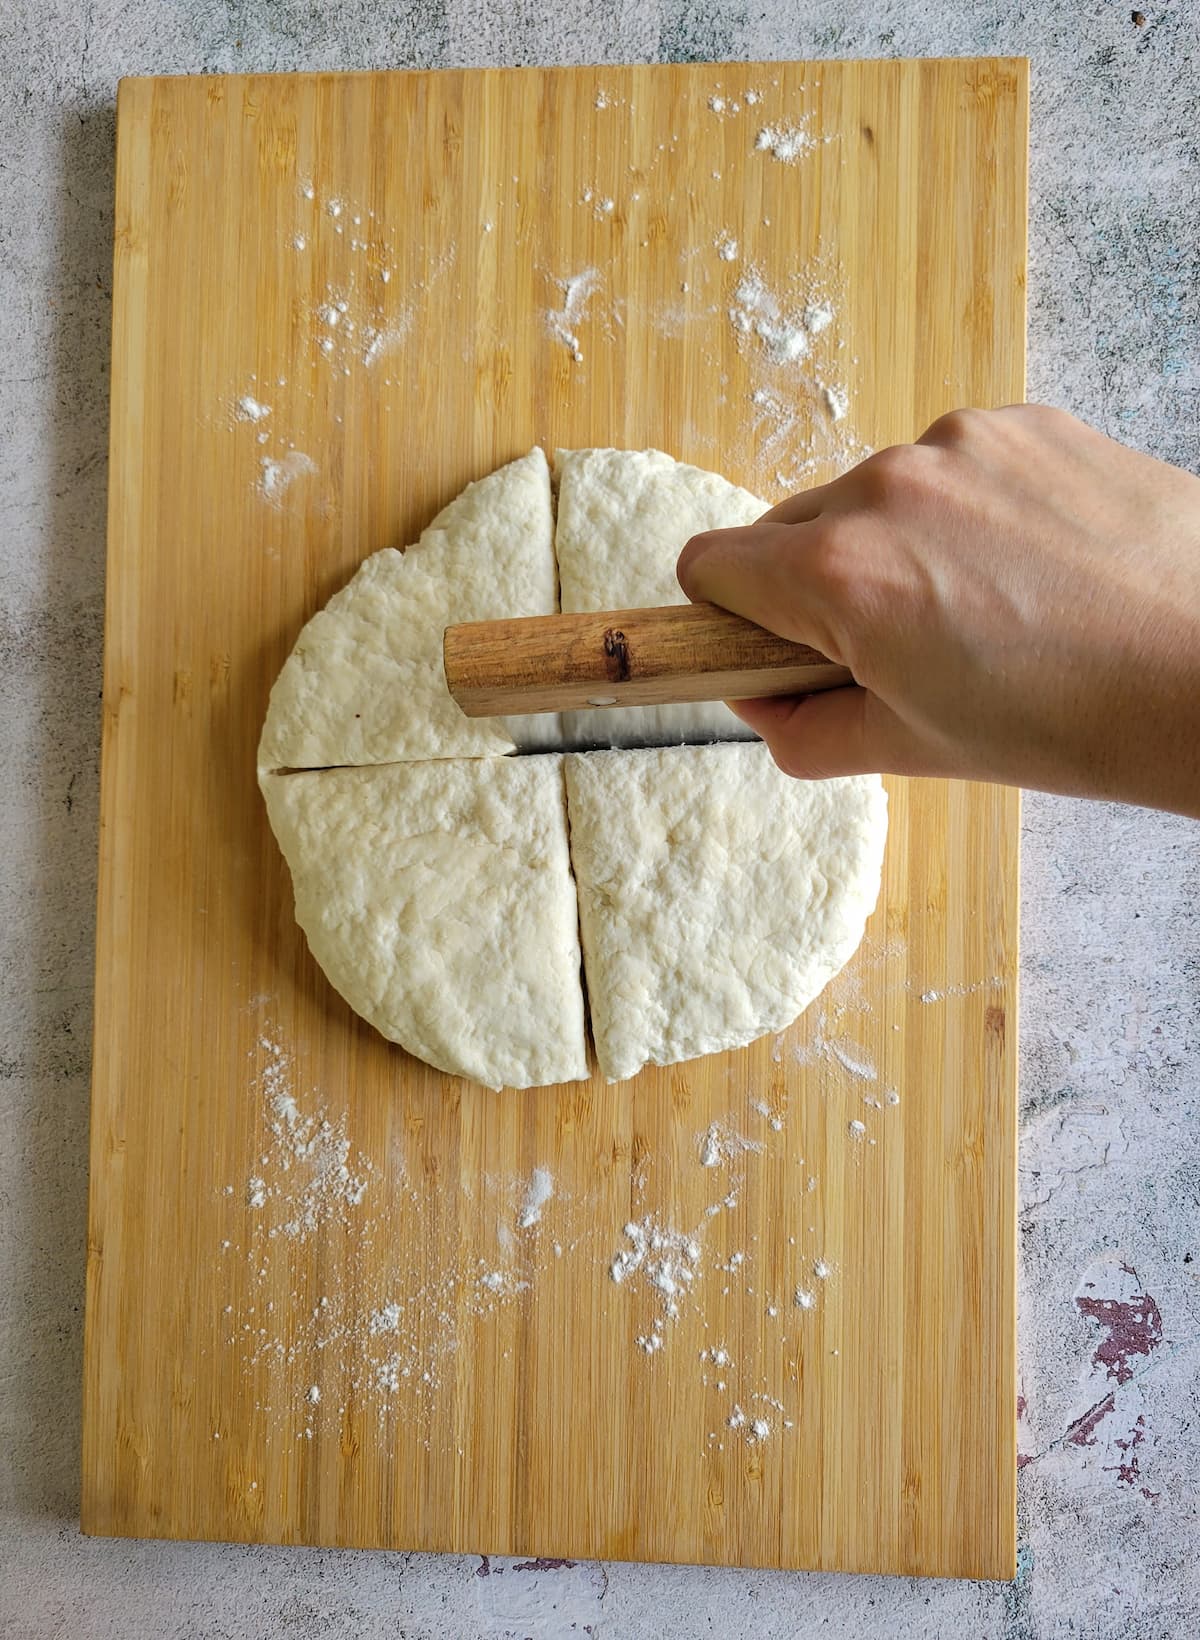 hand with a dough scraper cutting a piece of dough into triangles